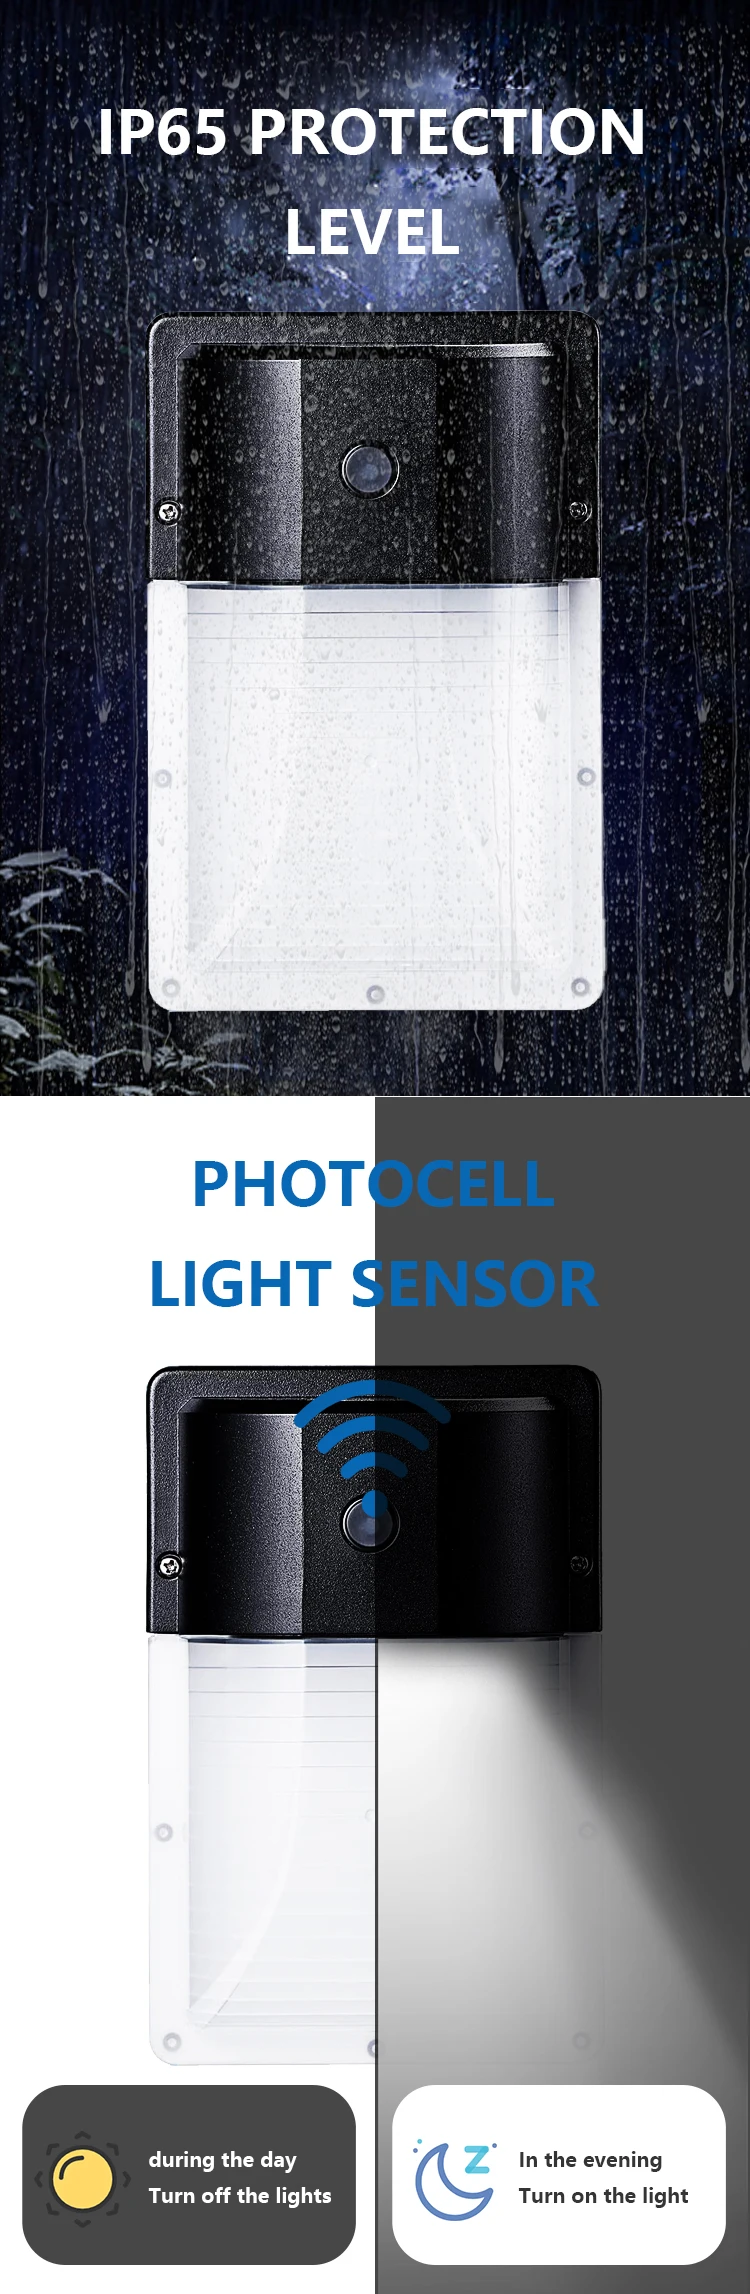 dusk-to-dawn photocell sensor outdoor mini wall lights 12W 13W wall mounted light